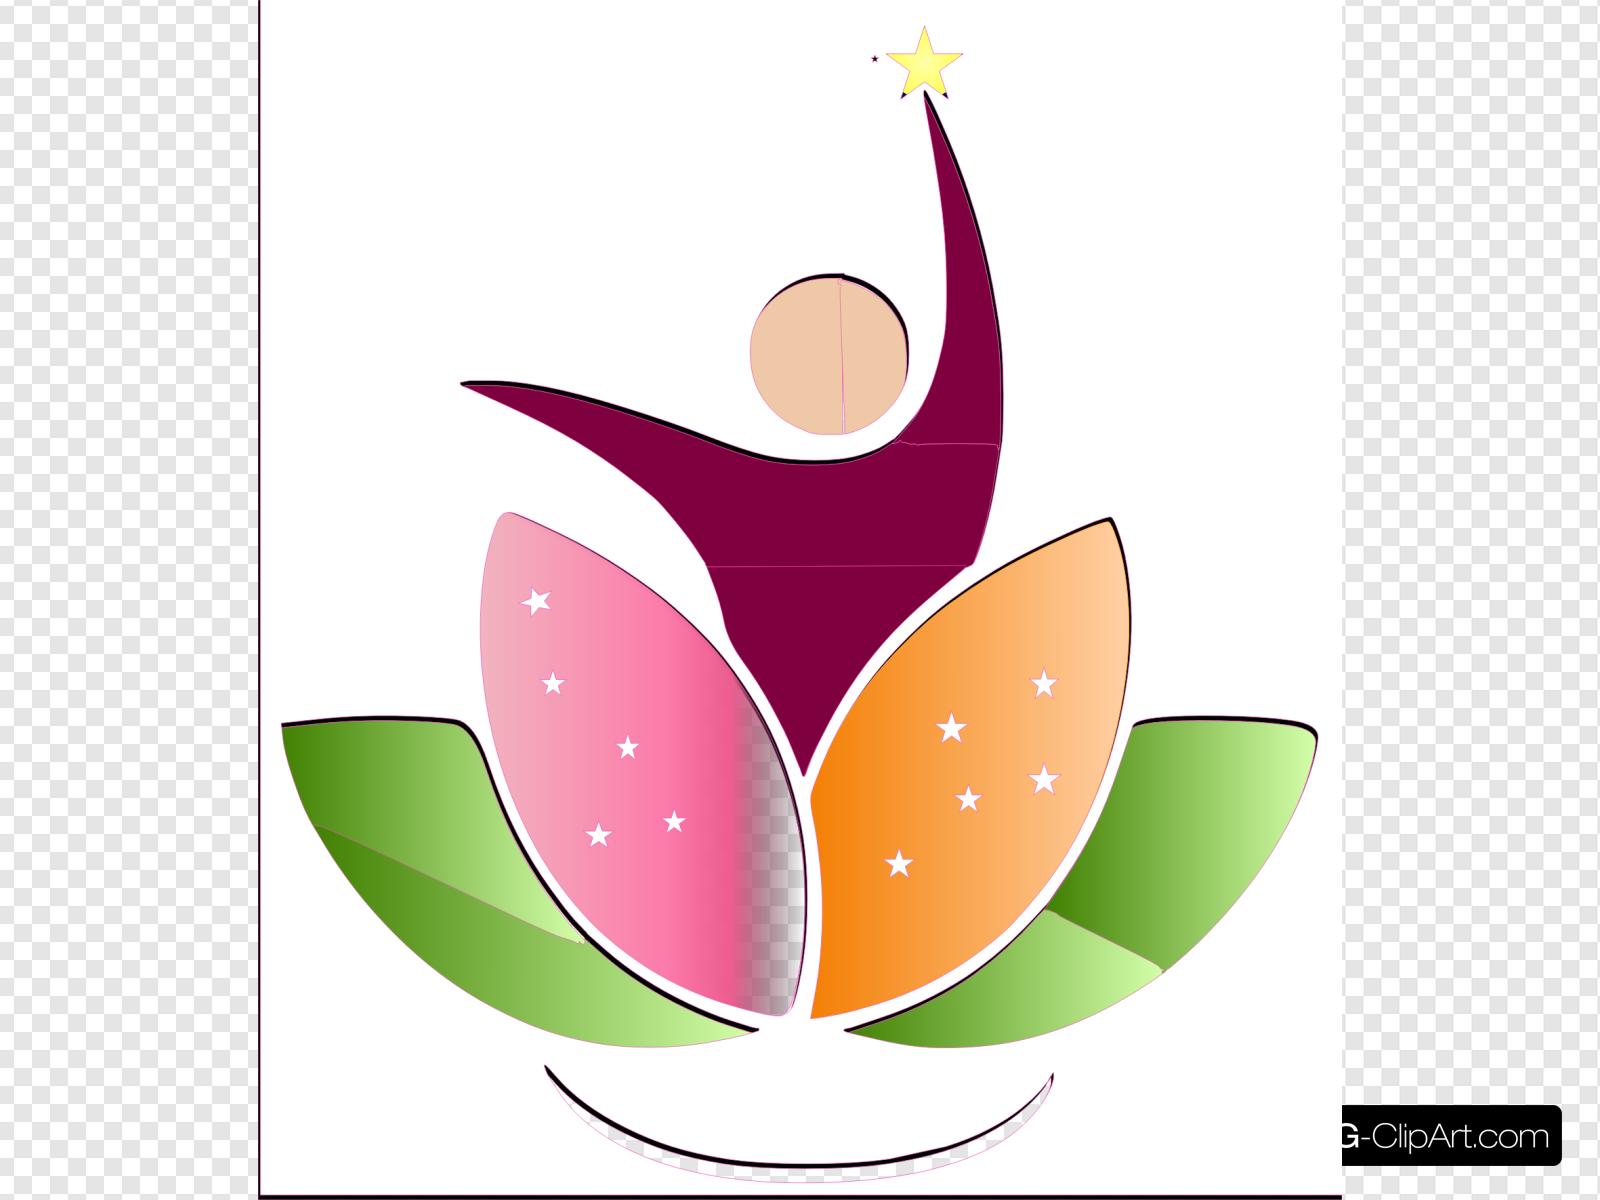 Logo Lotus Elo Clip art, Icon and SVG.